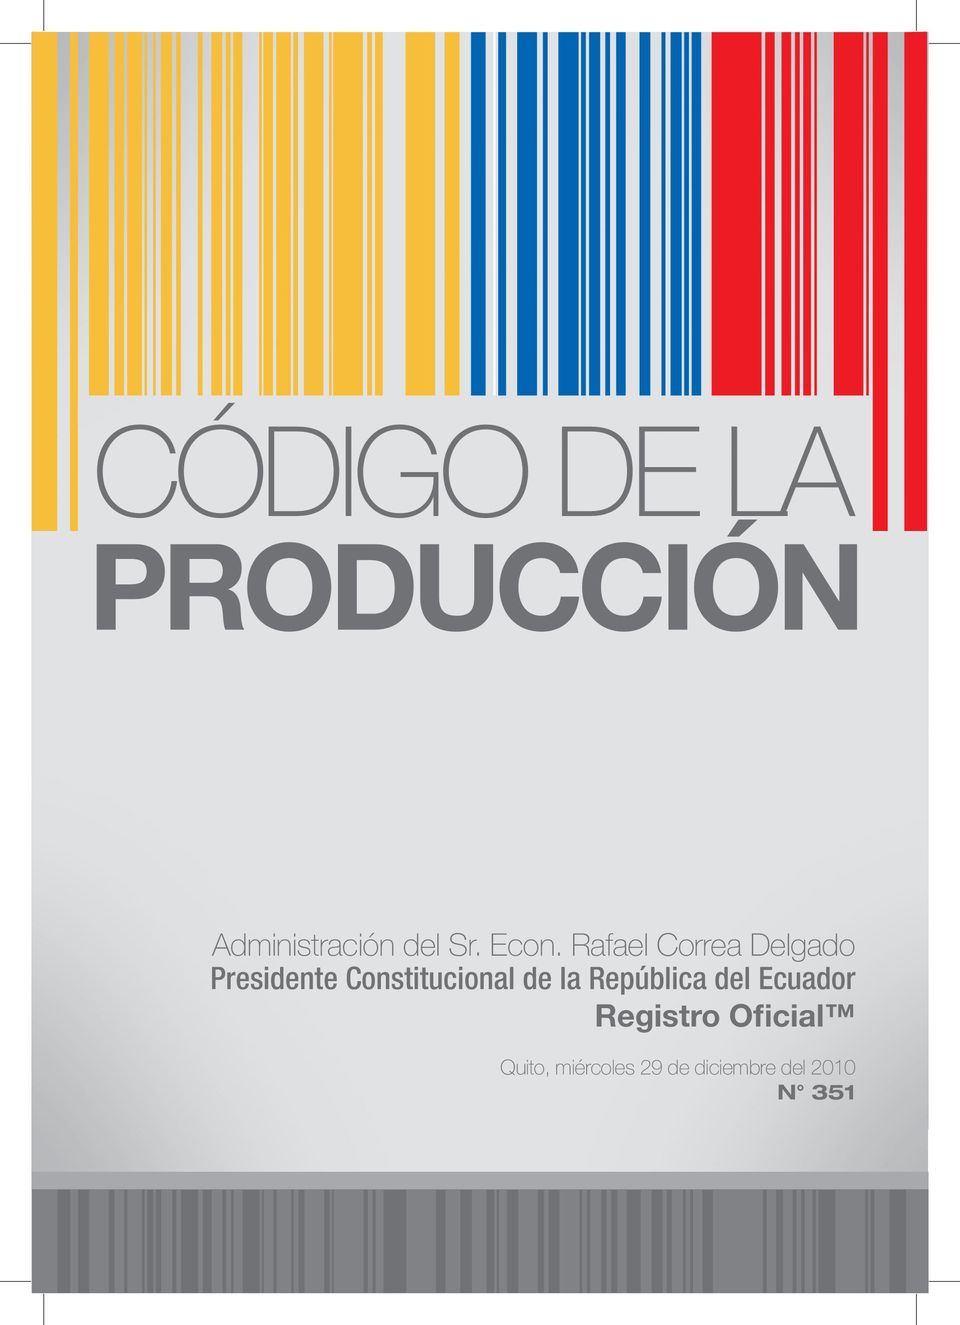 Constitucional de la República del Ecuador